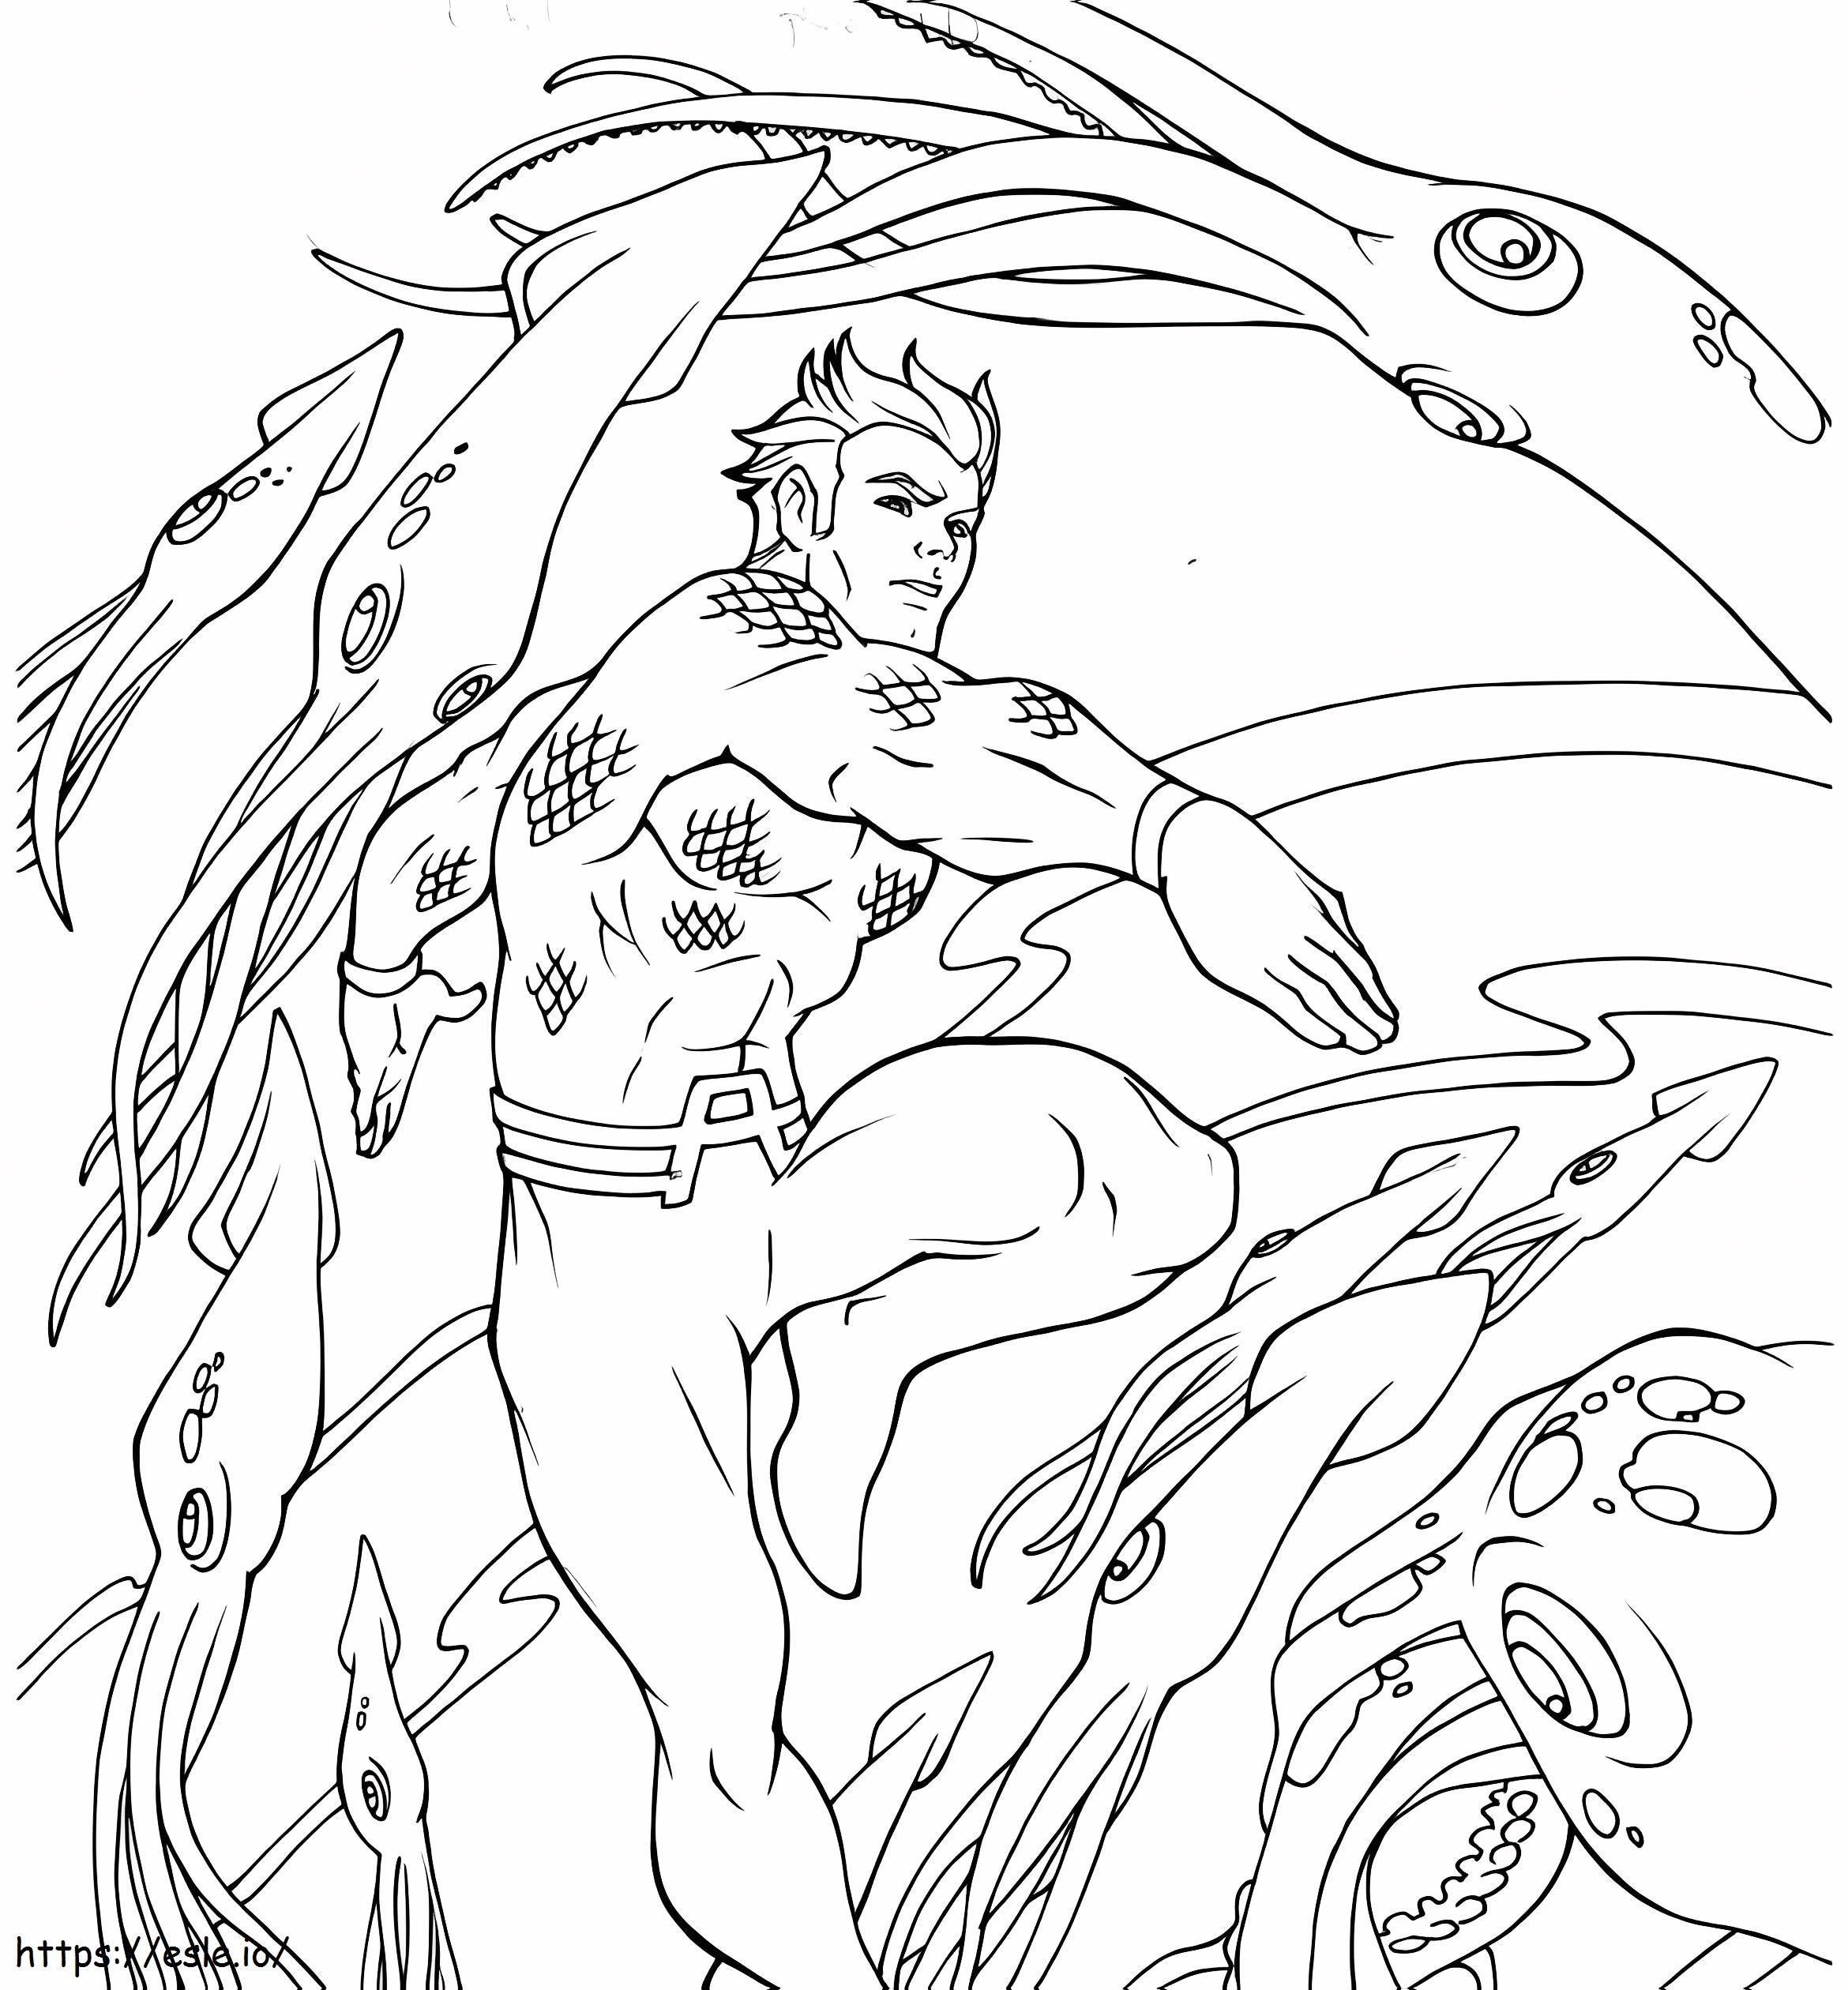 Aquaman i Animal Marino kolorowanka